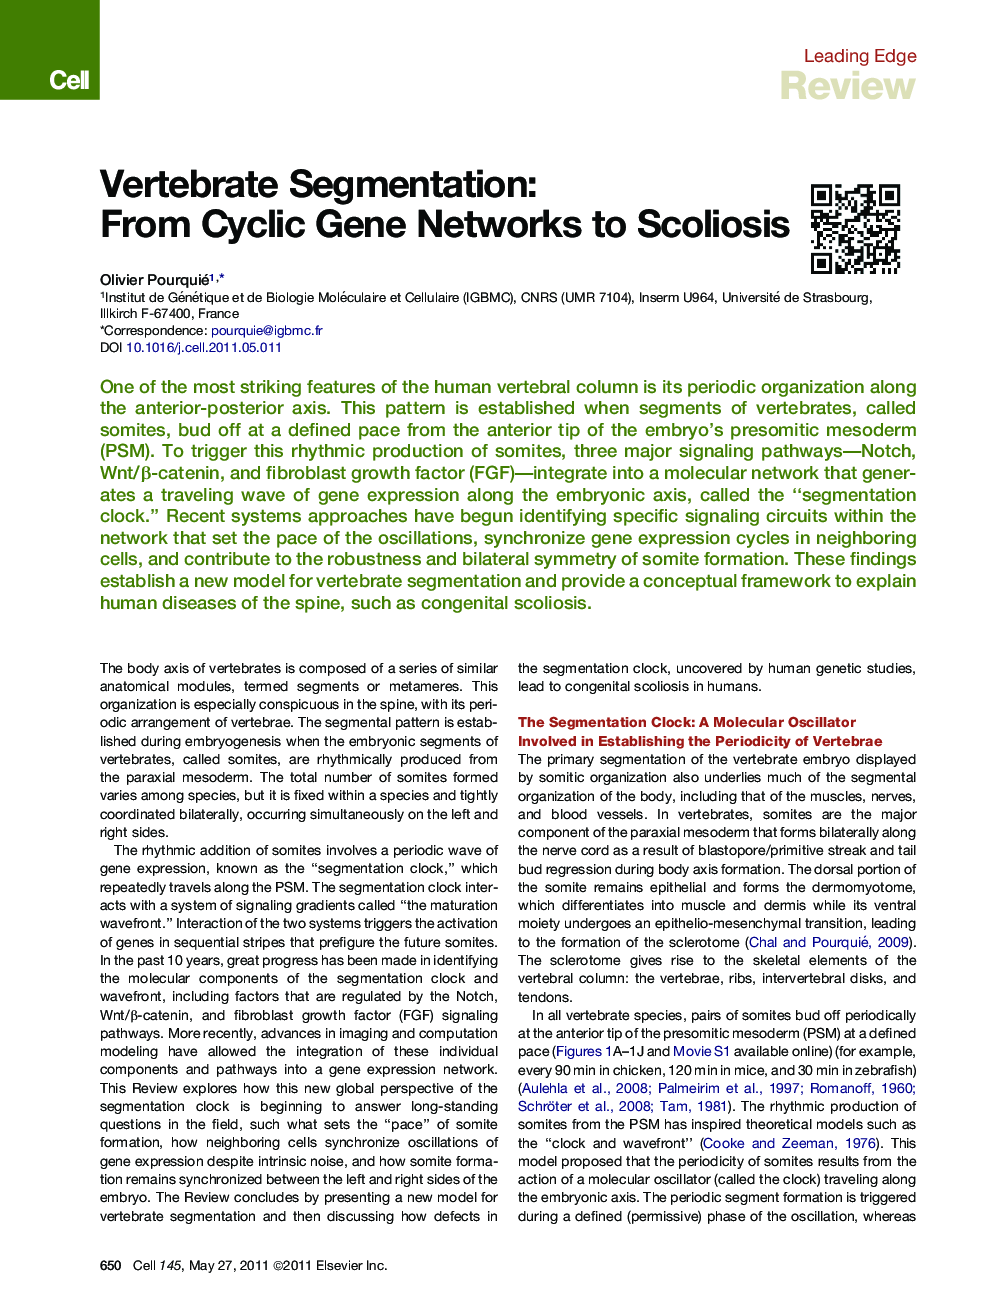 Vertebrate Segmentation: From Cyclic Gene Networks to Scoliosis